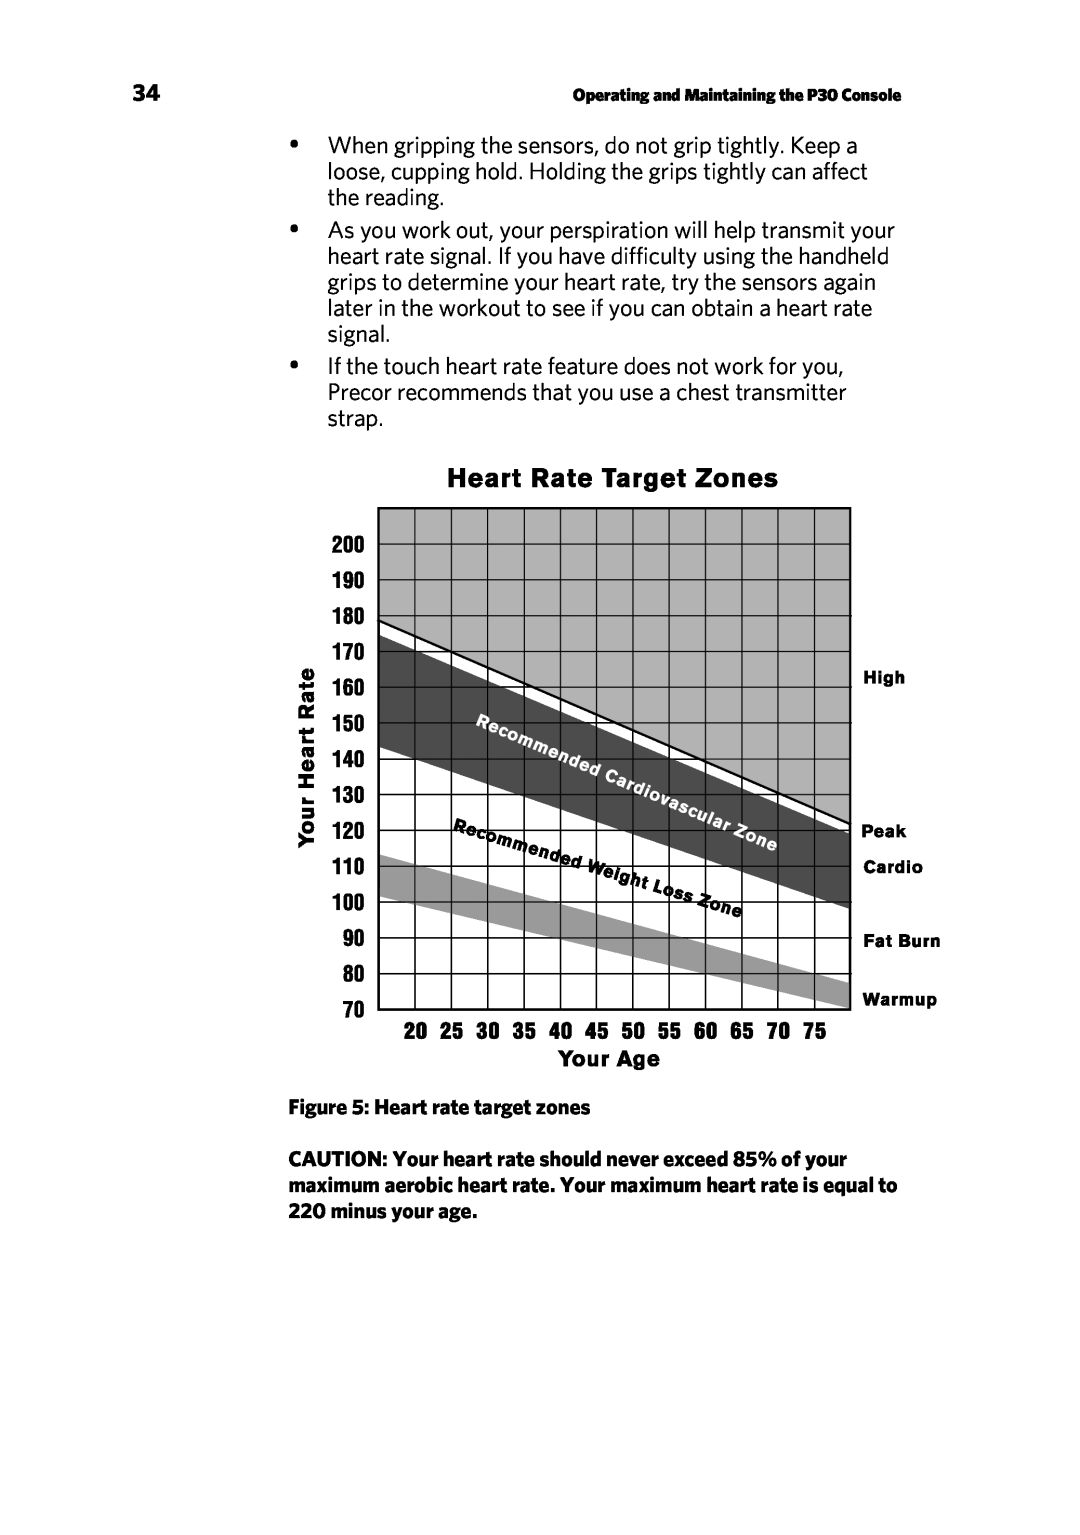 Precor P30 manual Heart rate target zones 